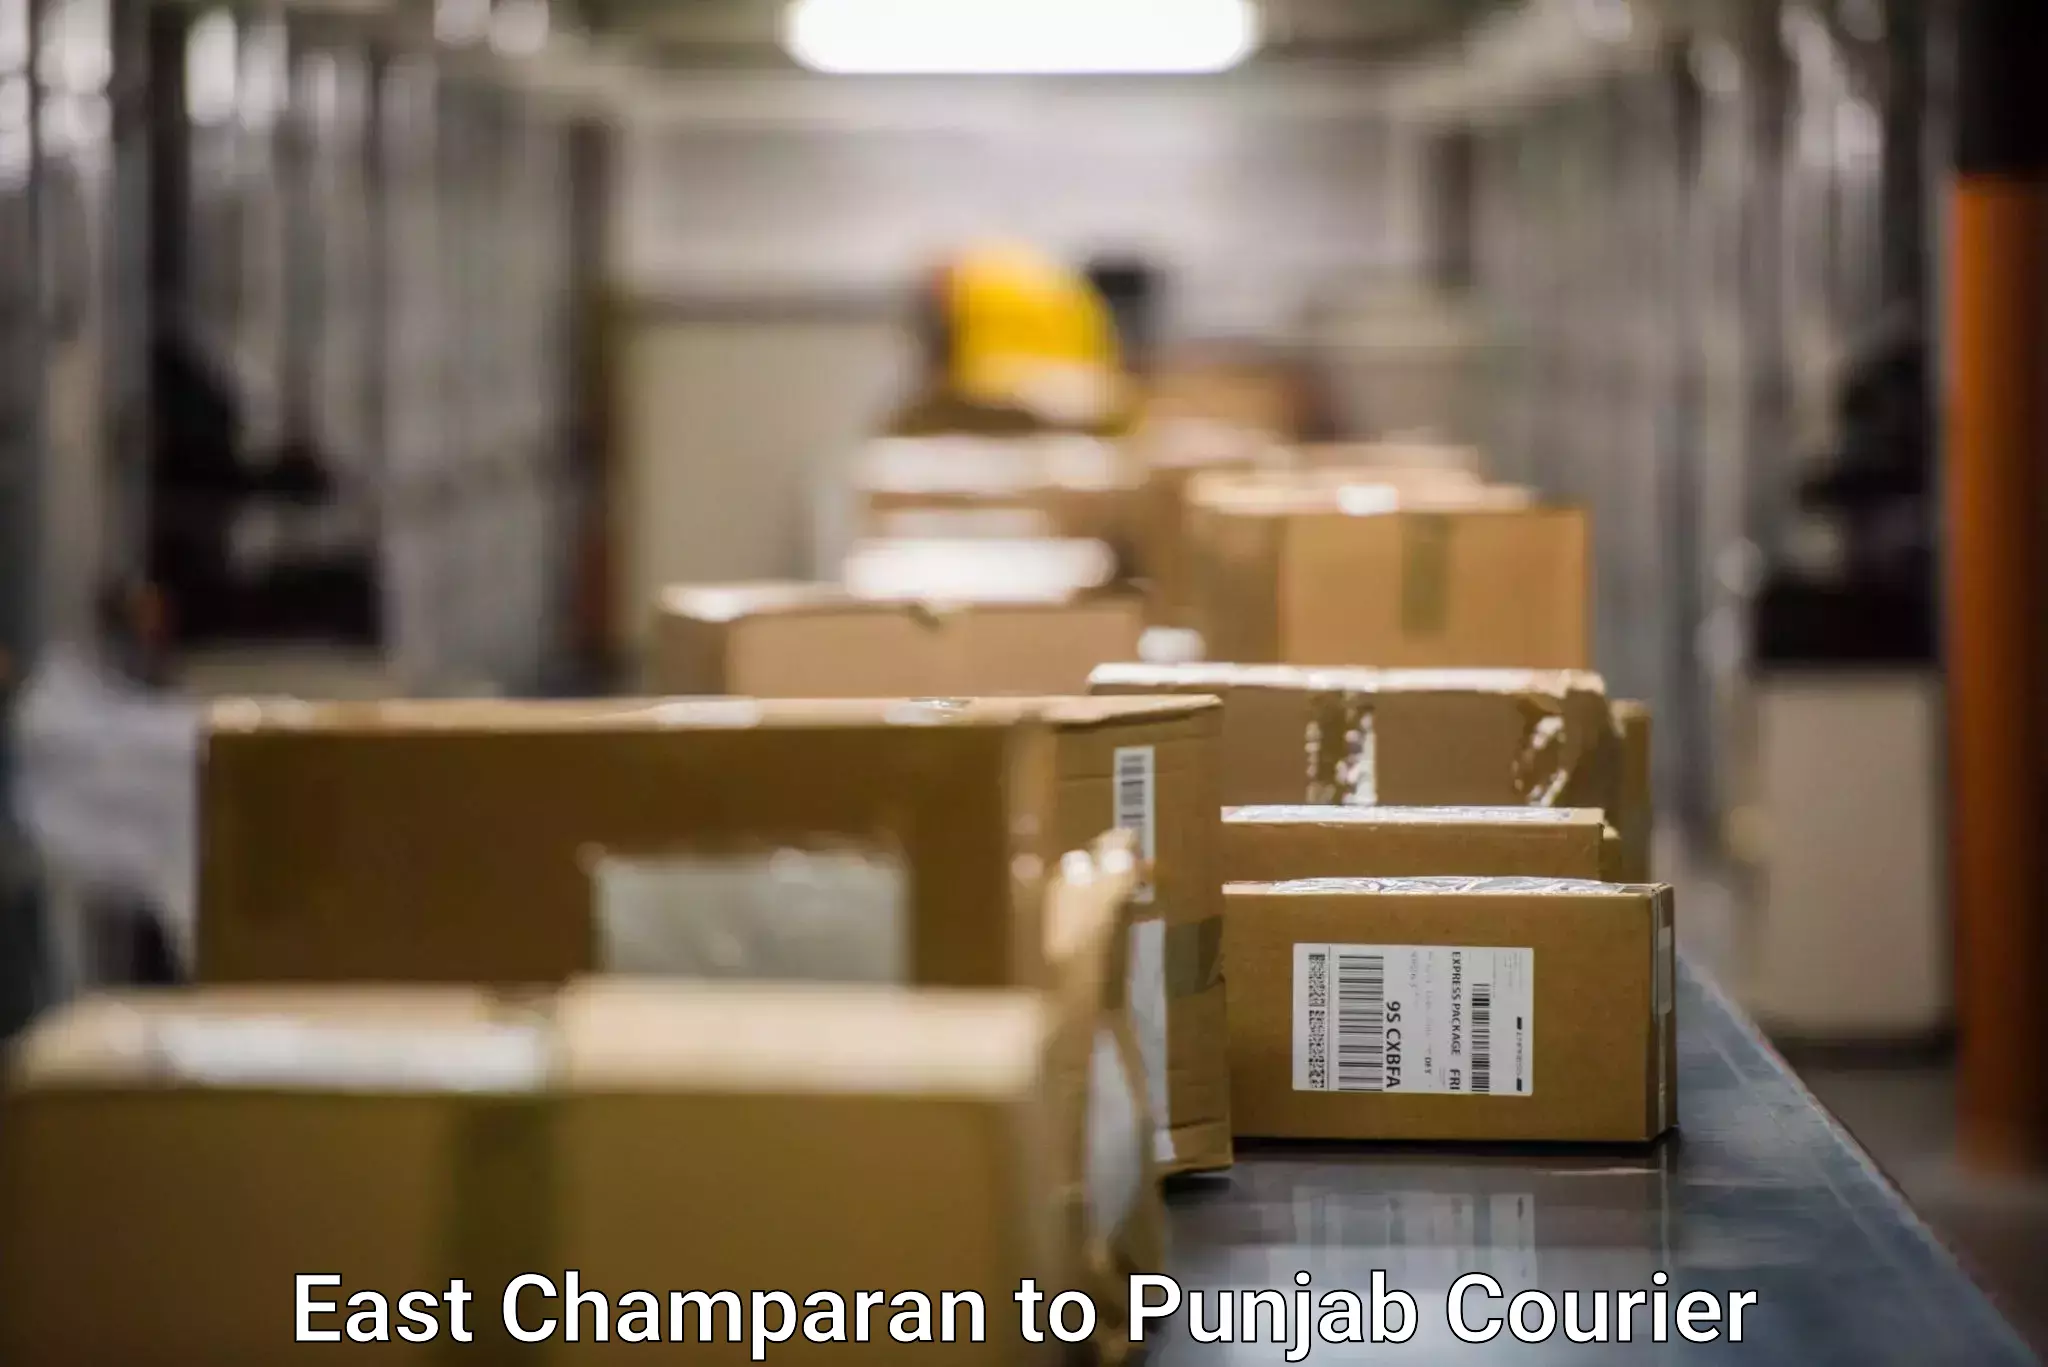 Efficient parcel service East Champaran to Malerkotla